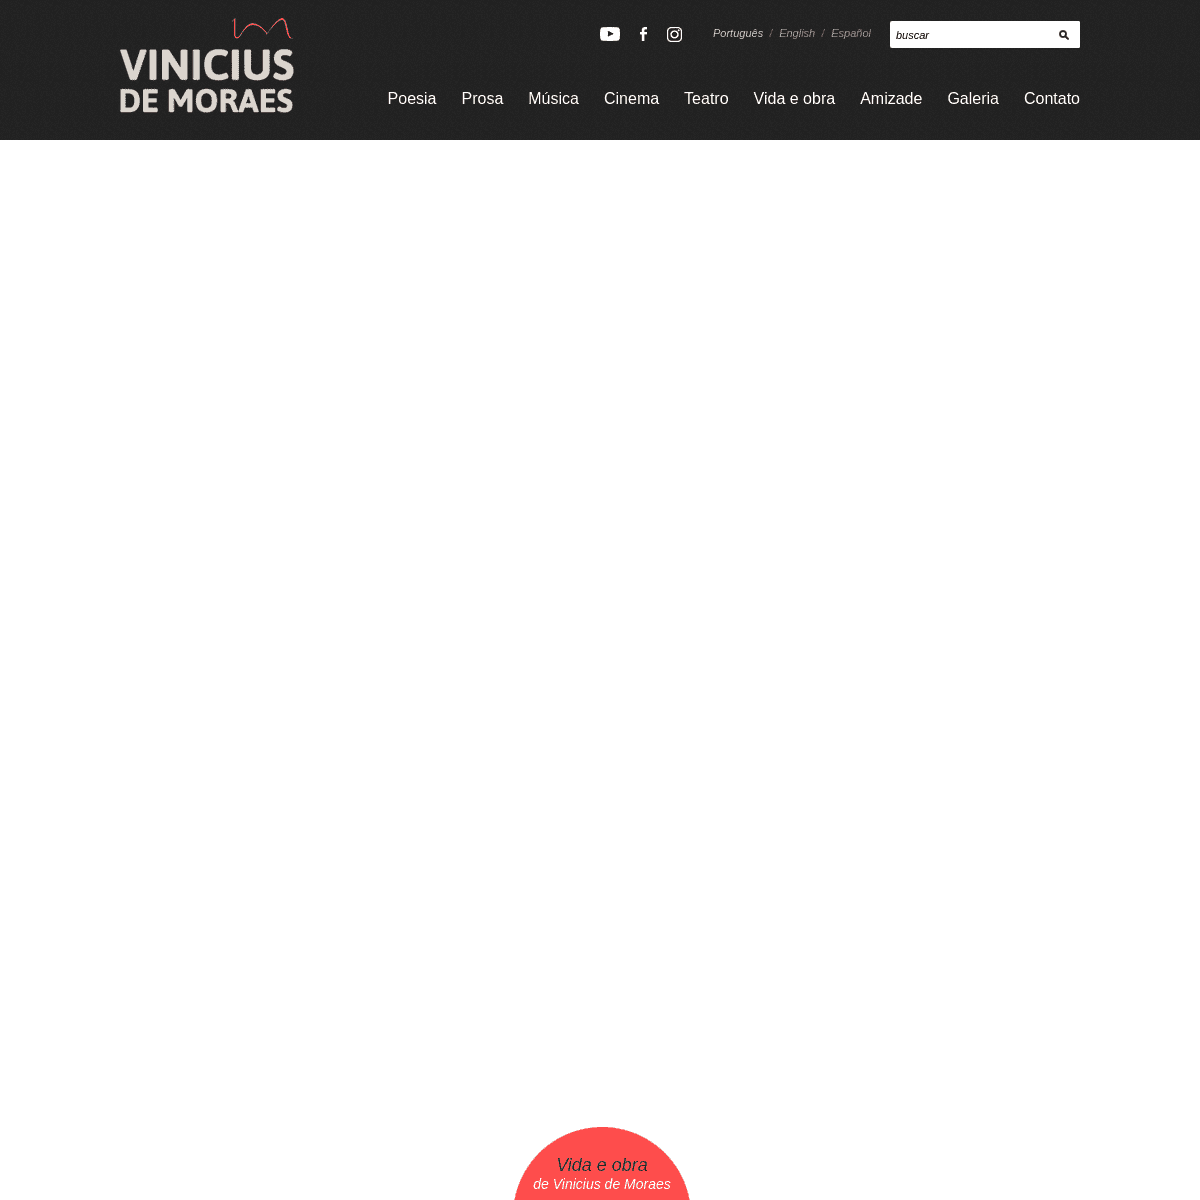 A complete backup of https://viniciusdemoraes.com.br